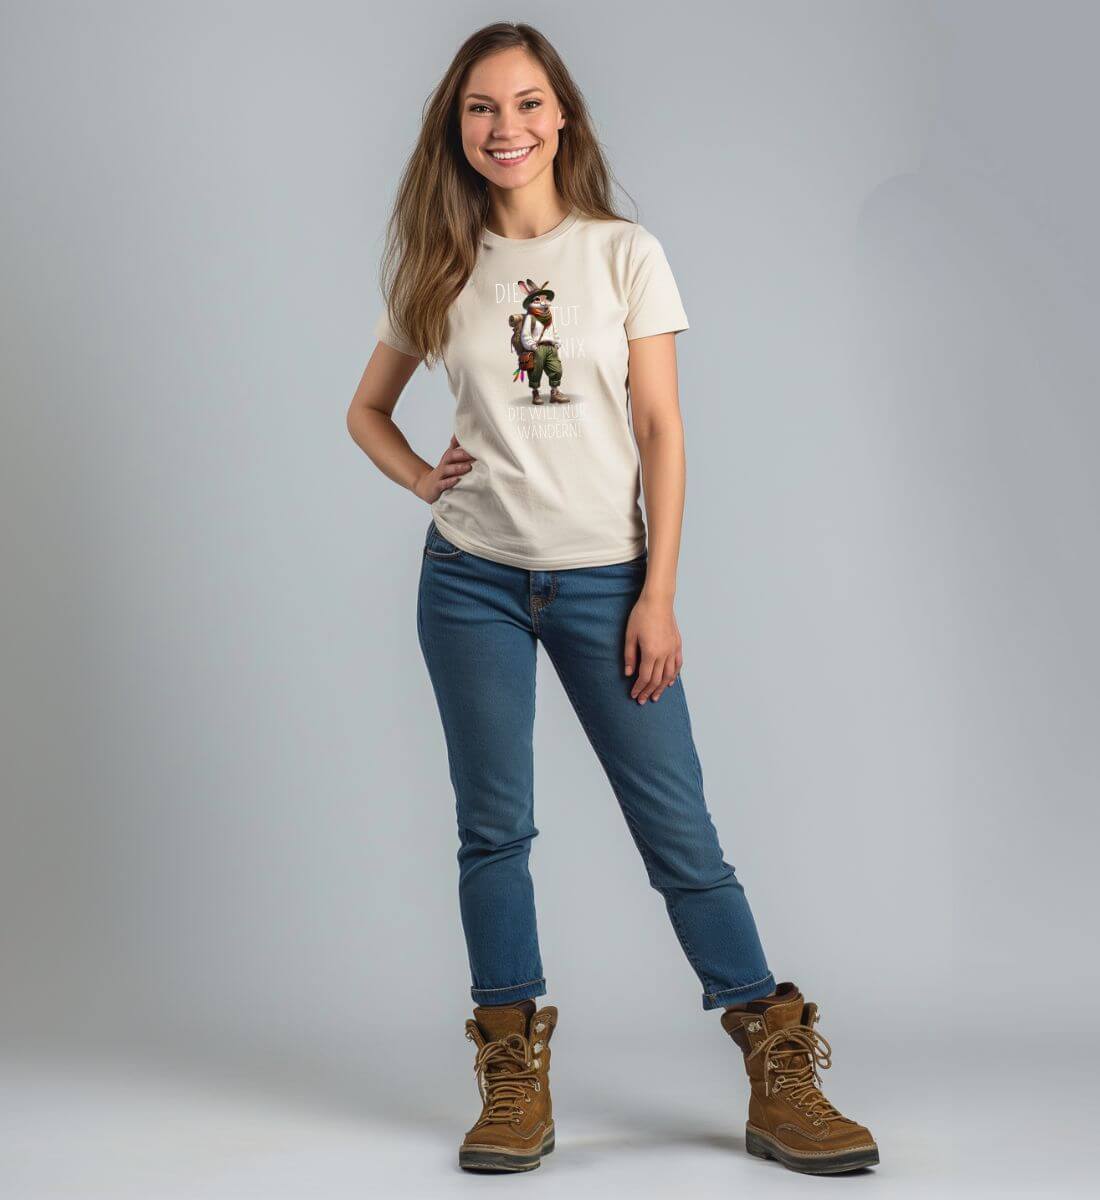 Die tut nix - Hase | Damen Premium Organic T-Shirt | Farbe: French Navy | Rad&Rucksack